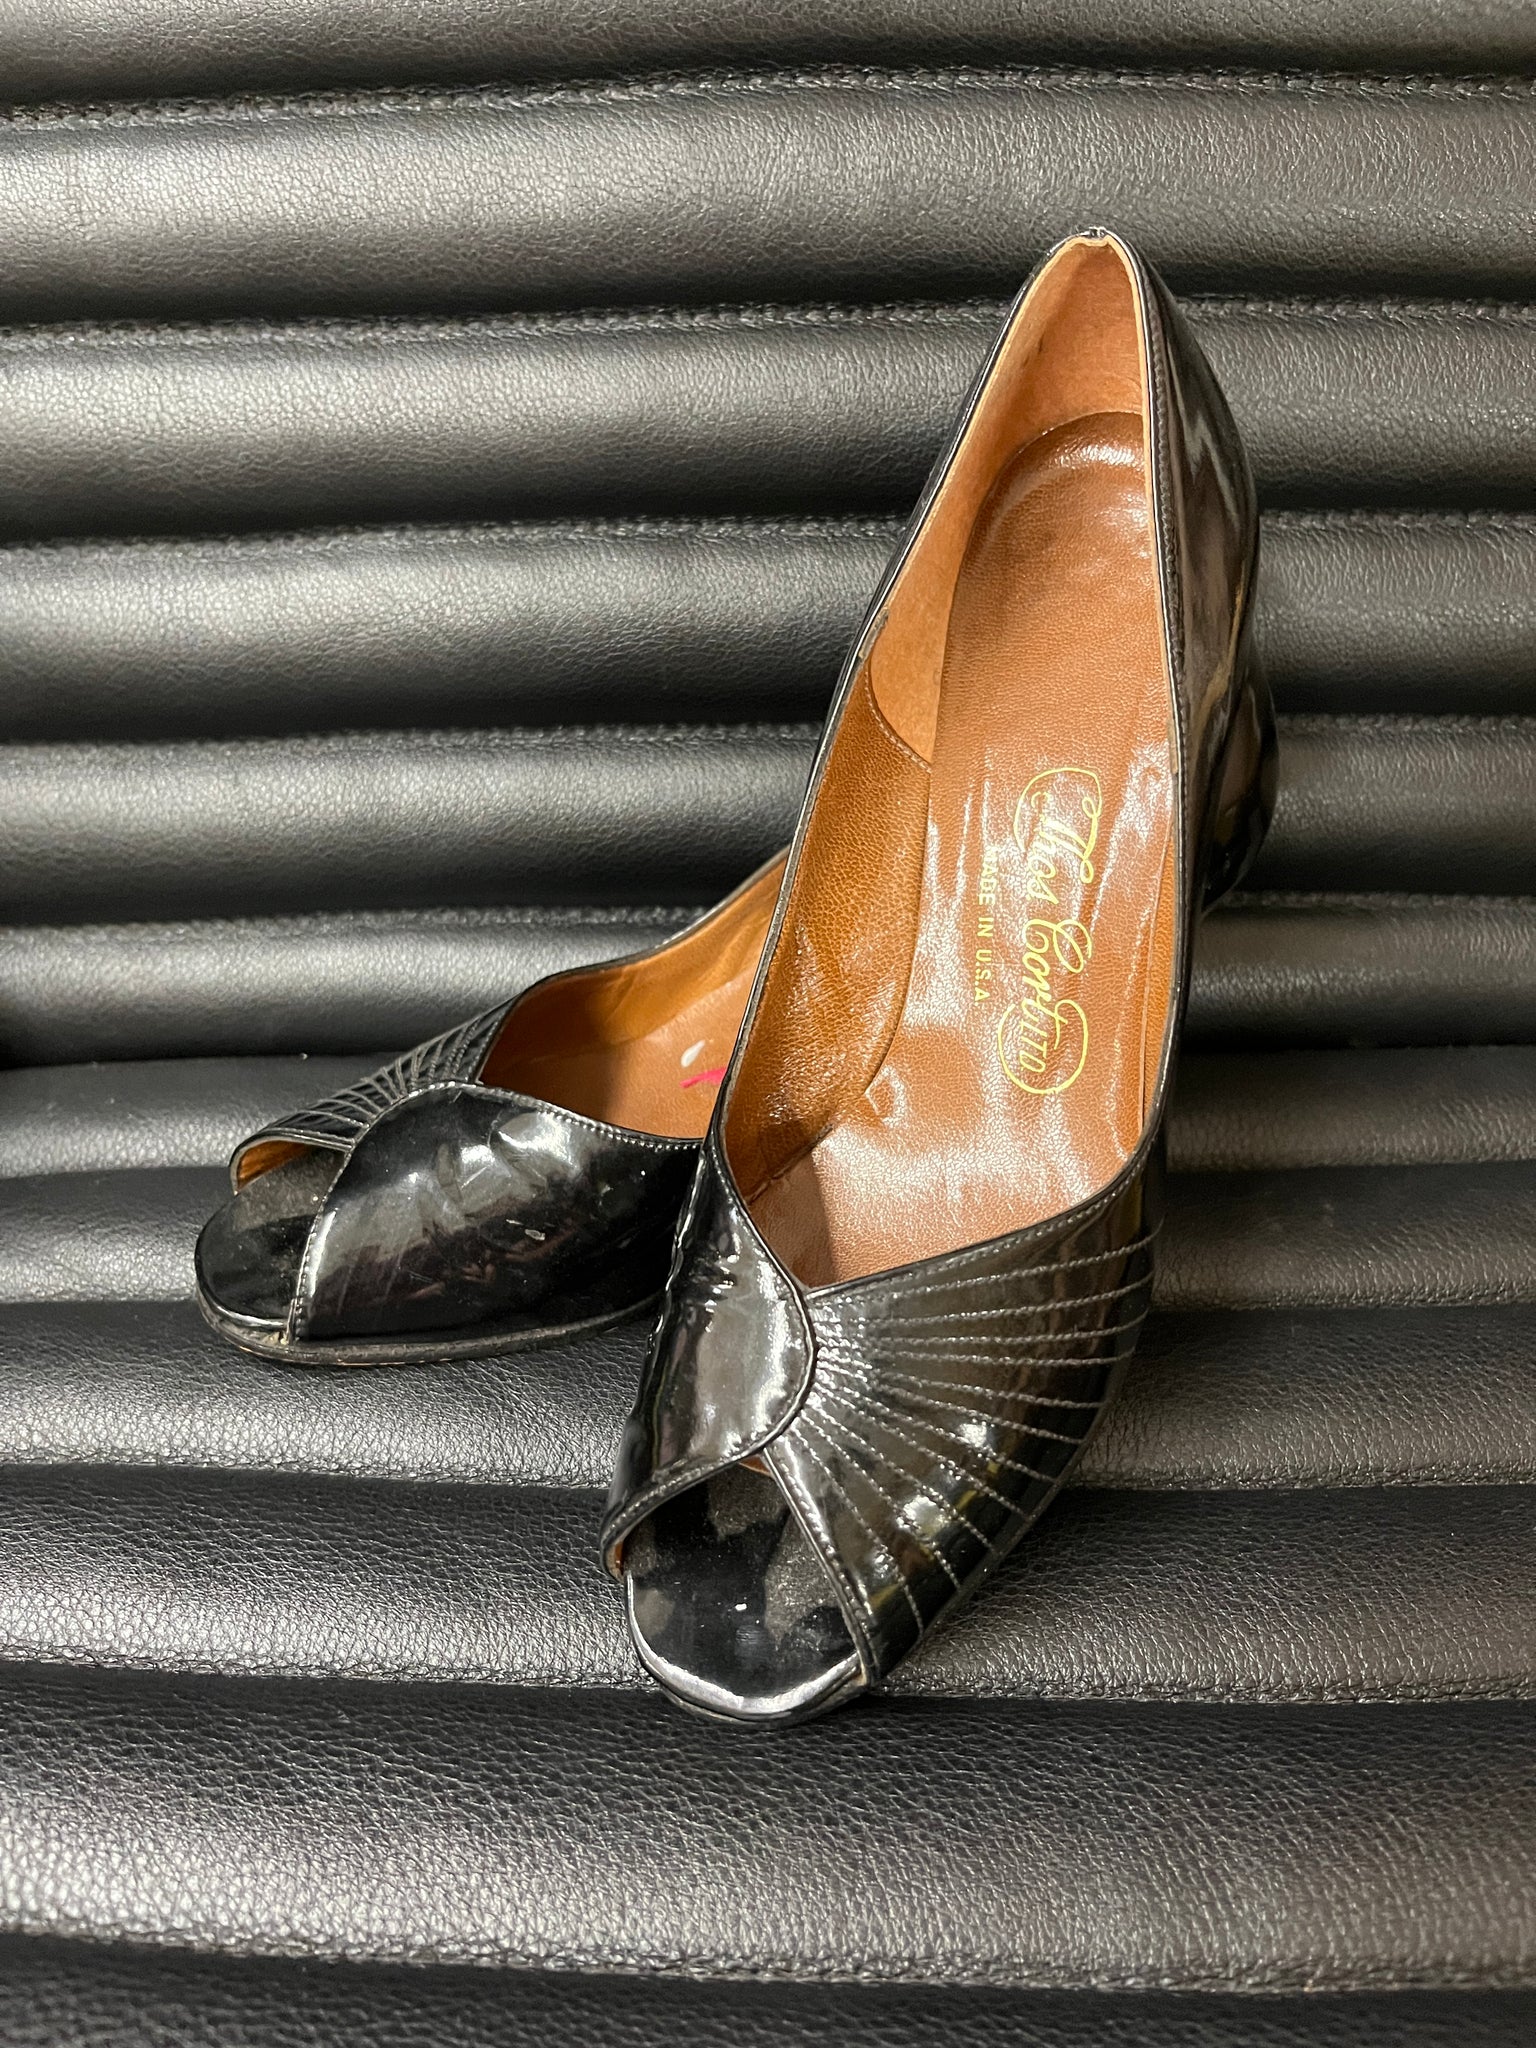 1960s SHOES - Thos Cort Ltd- patent leather peep toe